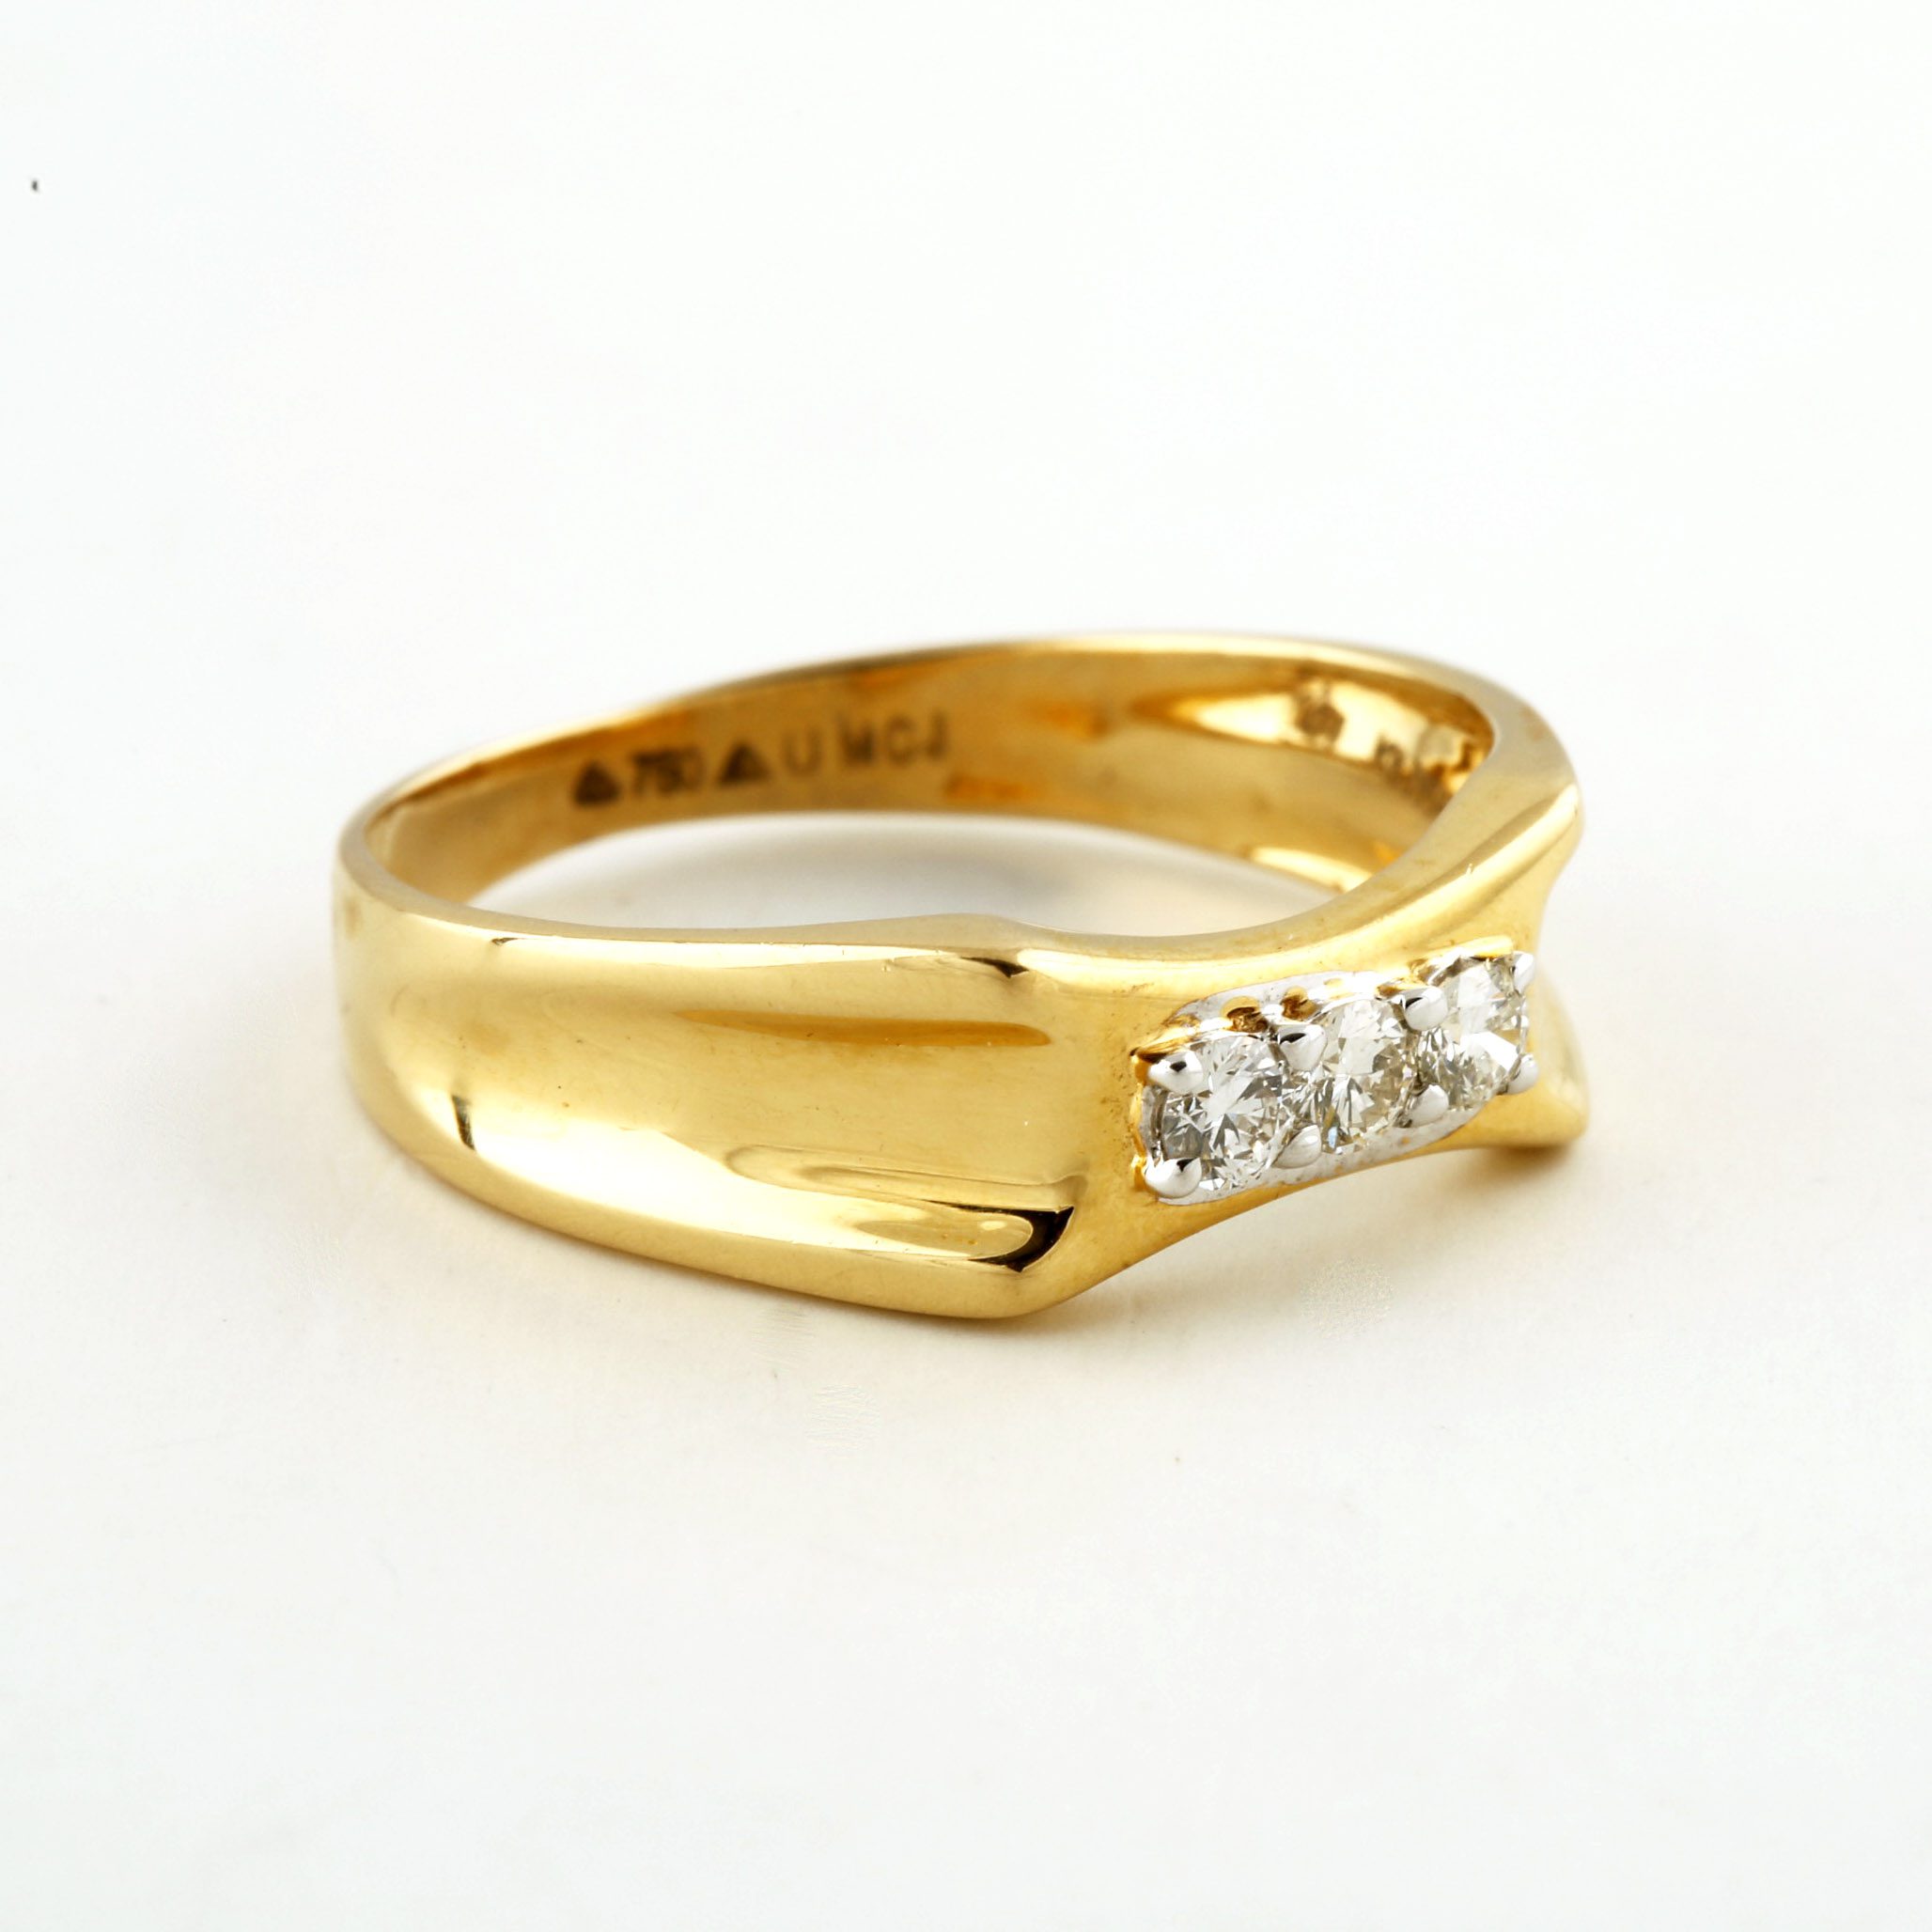 18K Yellow Gold Men's Diamond Ring 1.32ct 13.5mm 013757